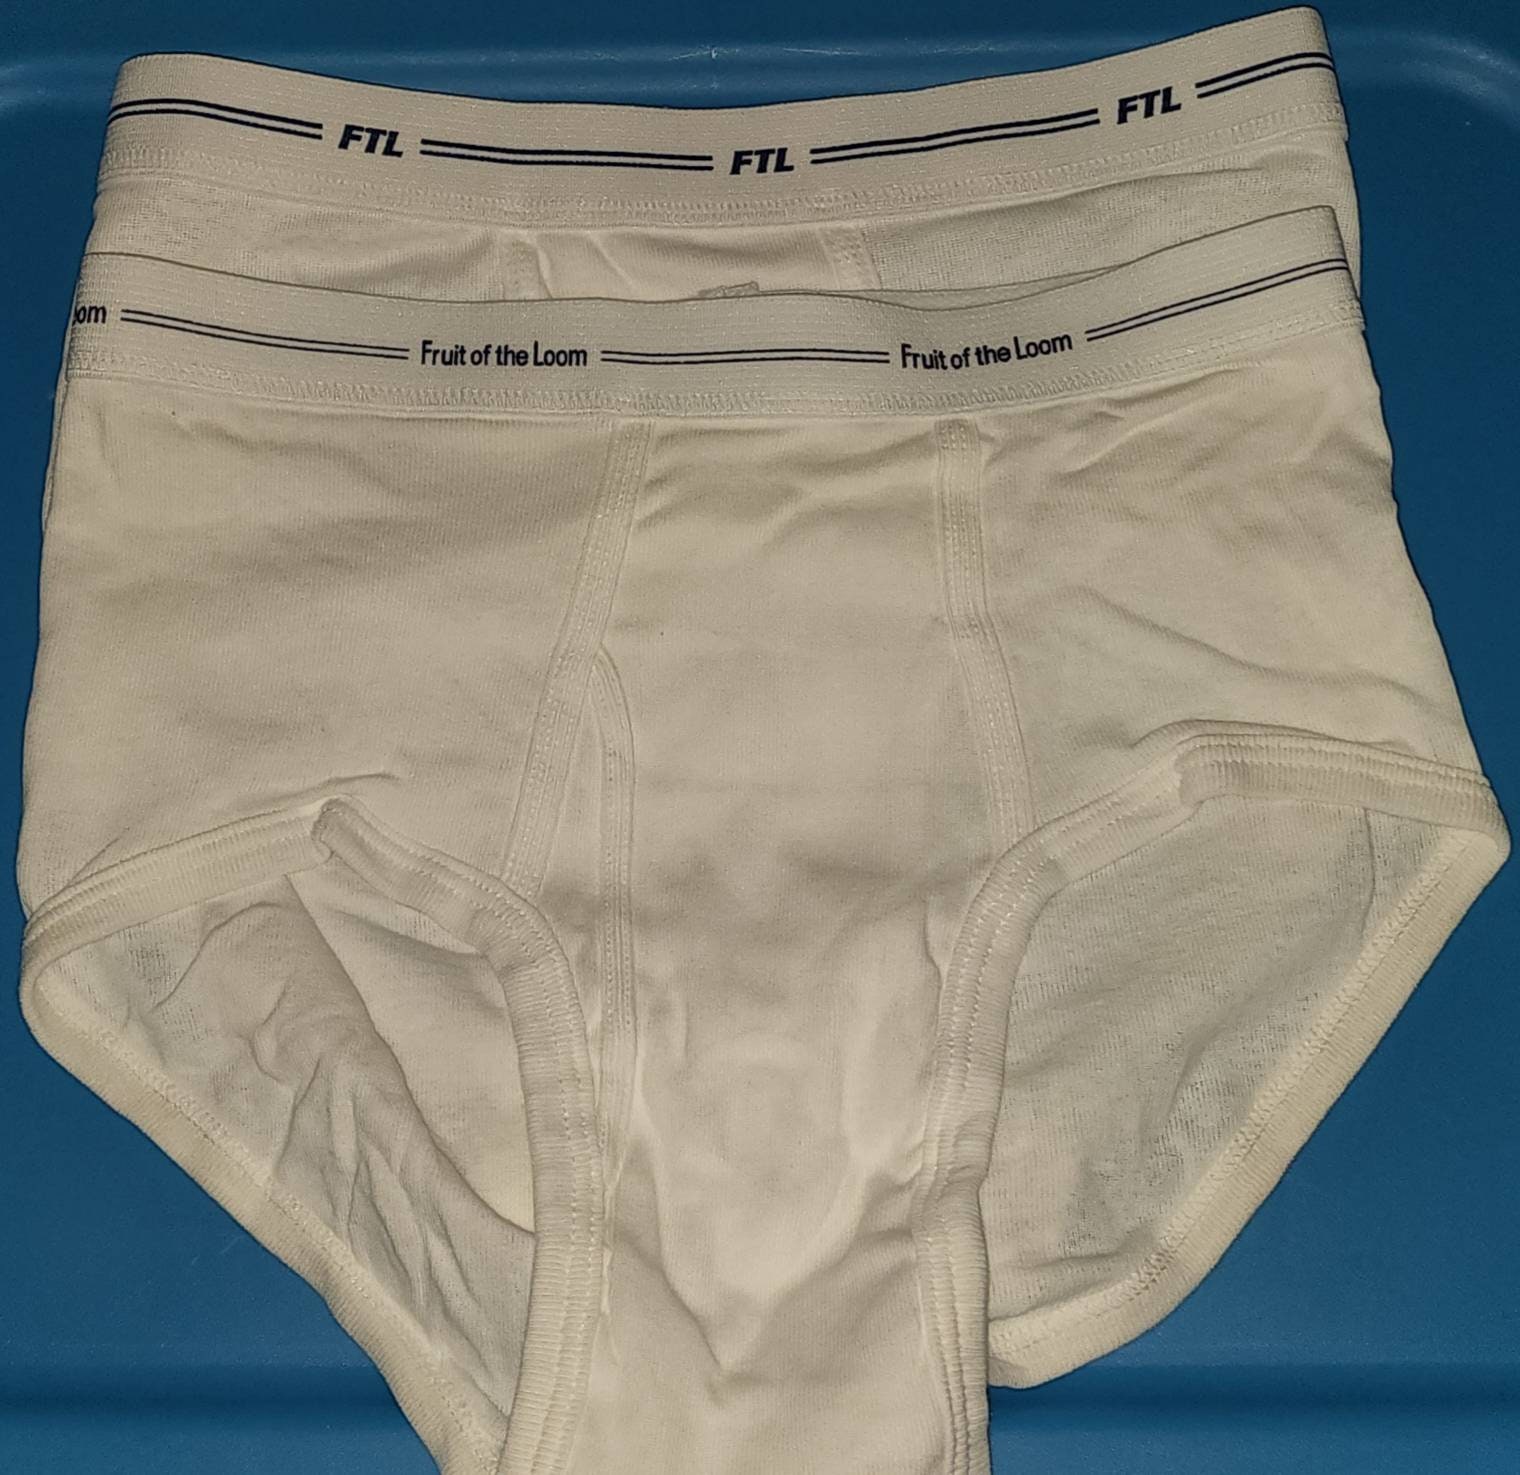 Mens Classic Sports S - XXL Soft Cotton Underwear Ribbed Slips